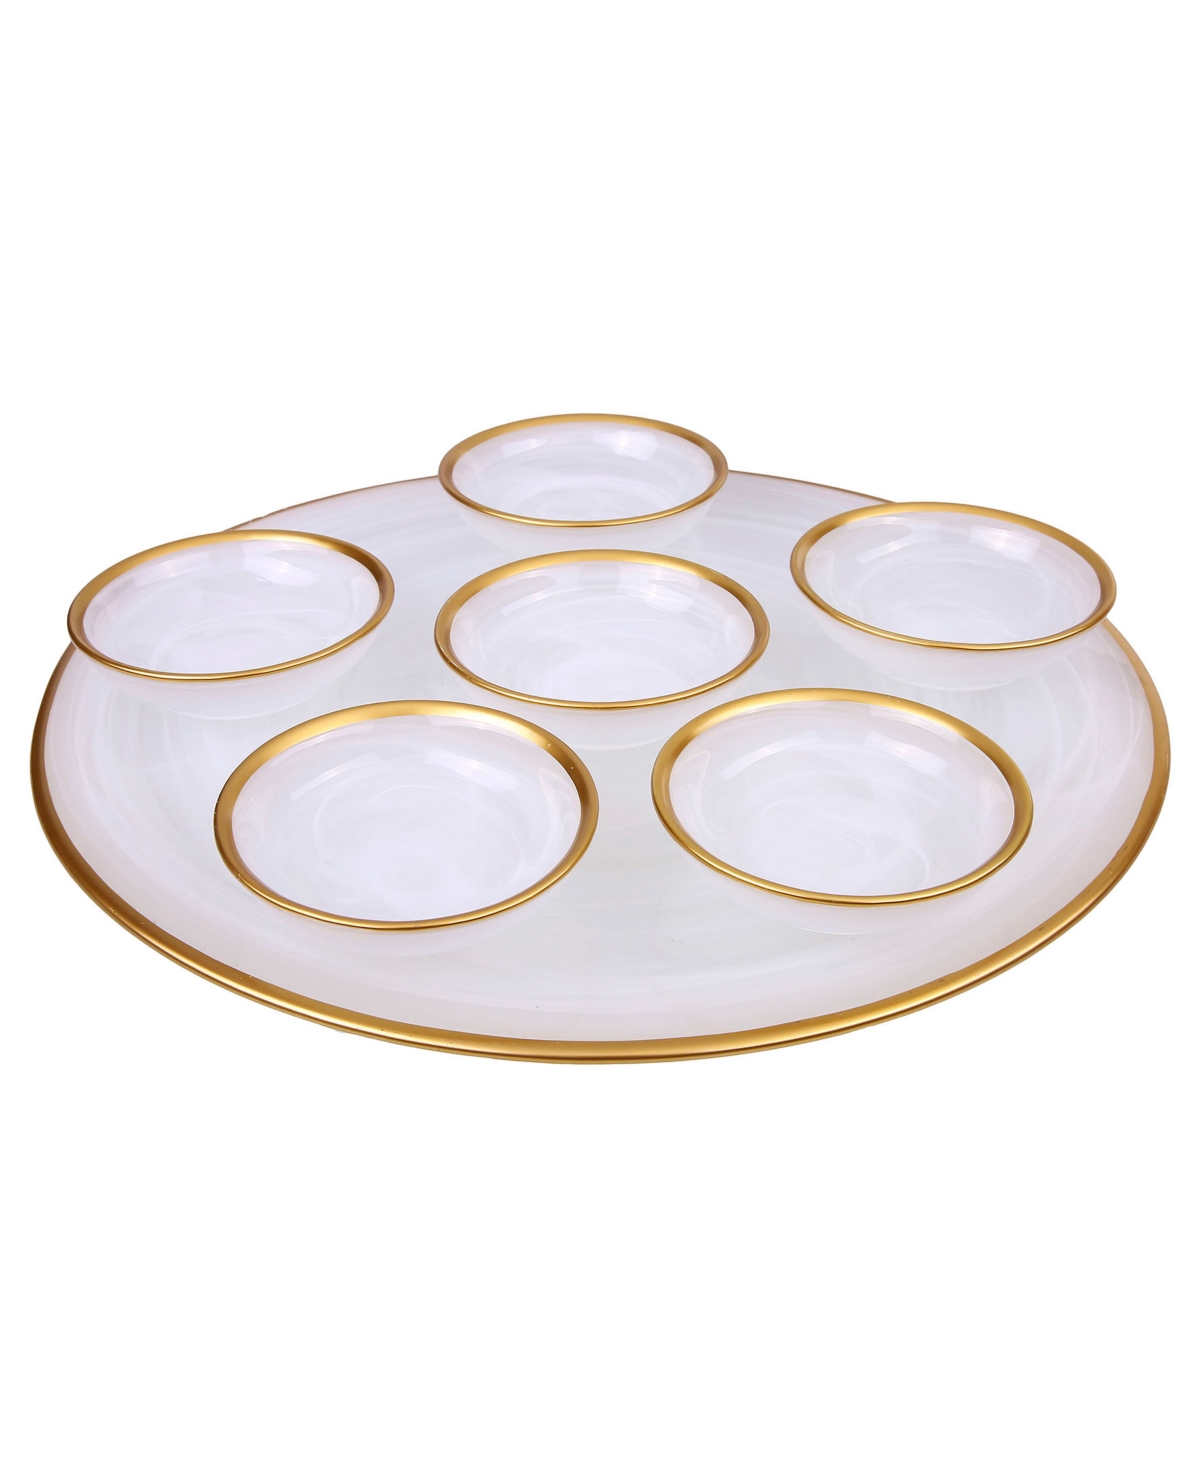 12.75" Alabaster Seder Plate with Rim - White